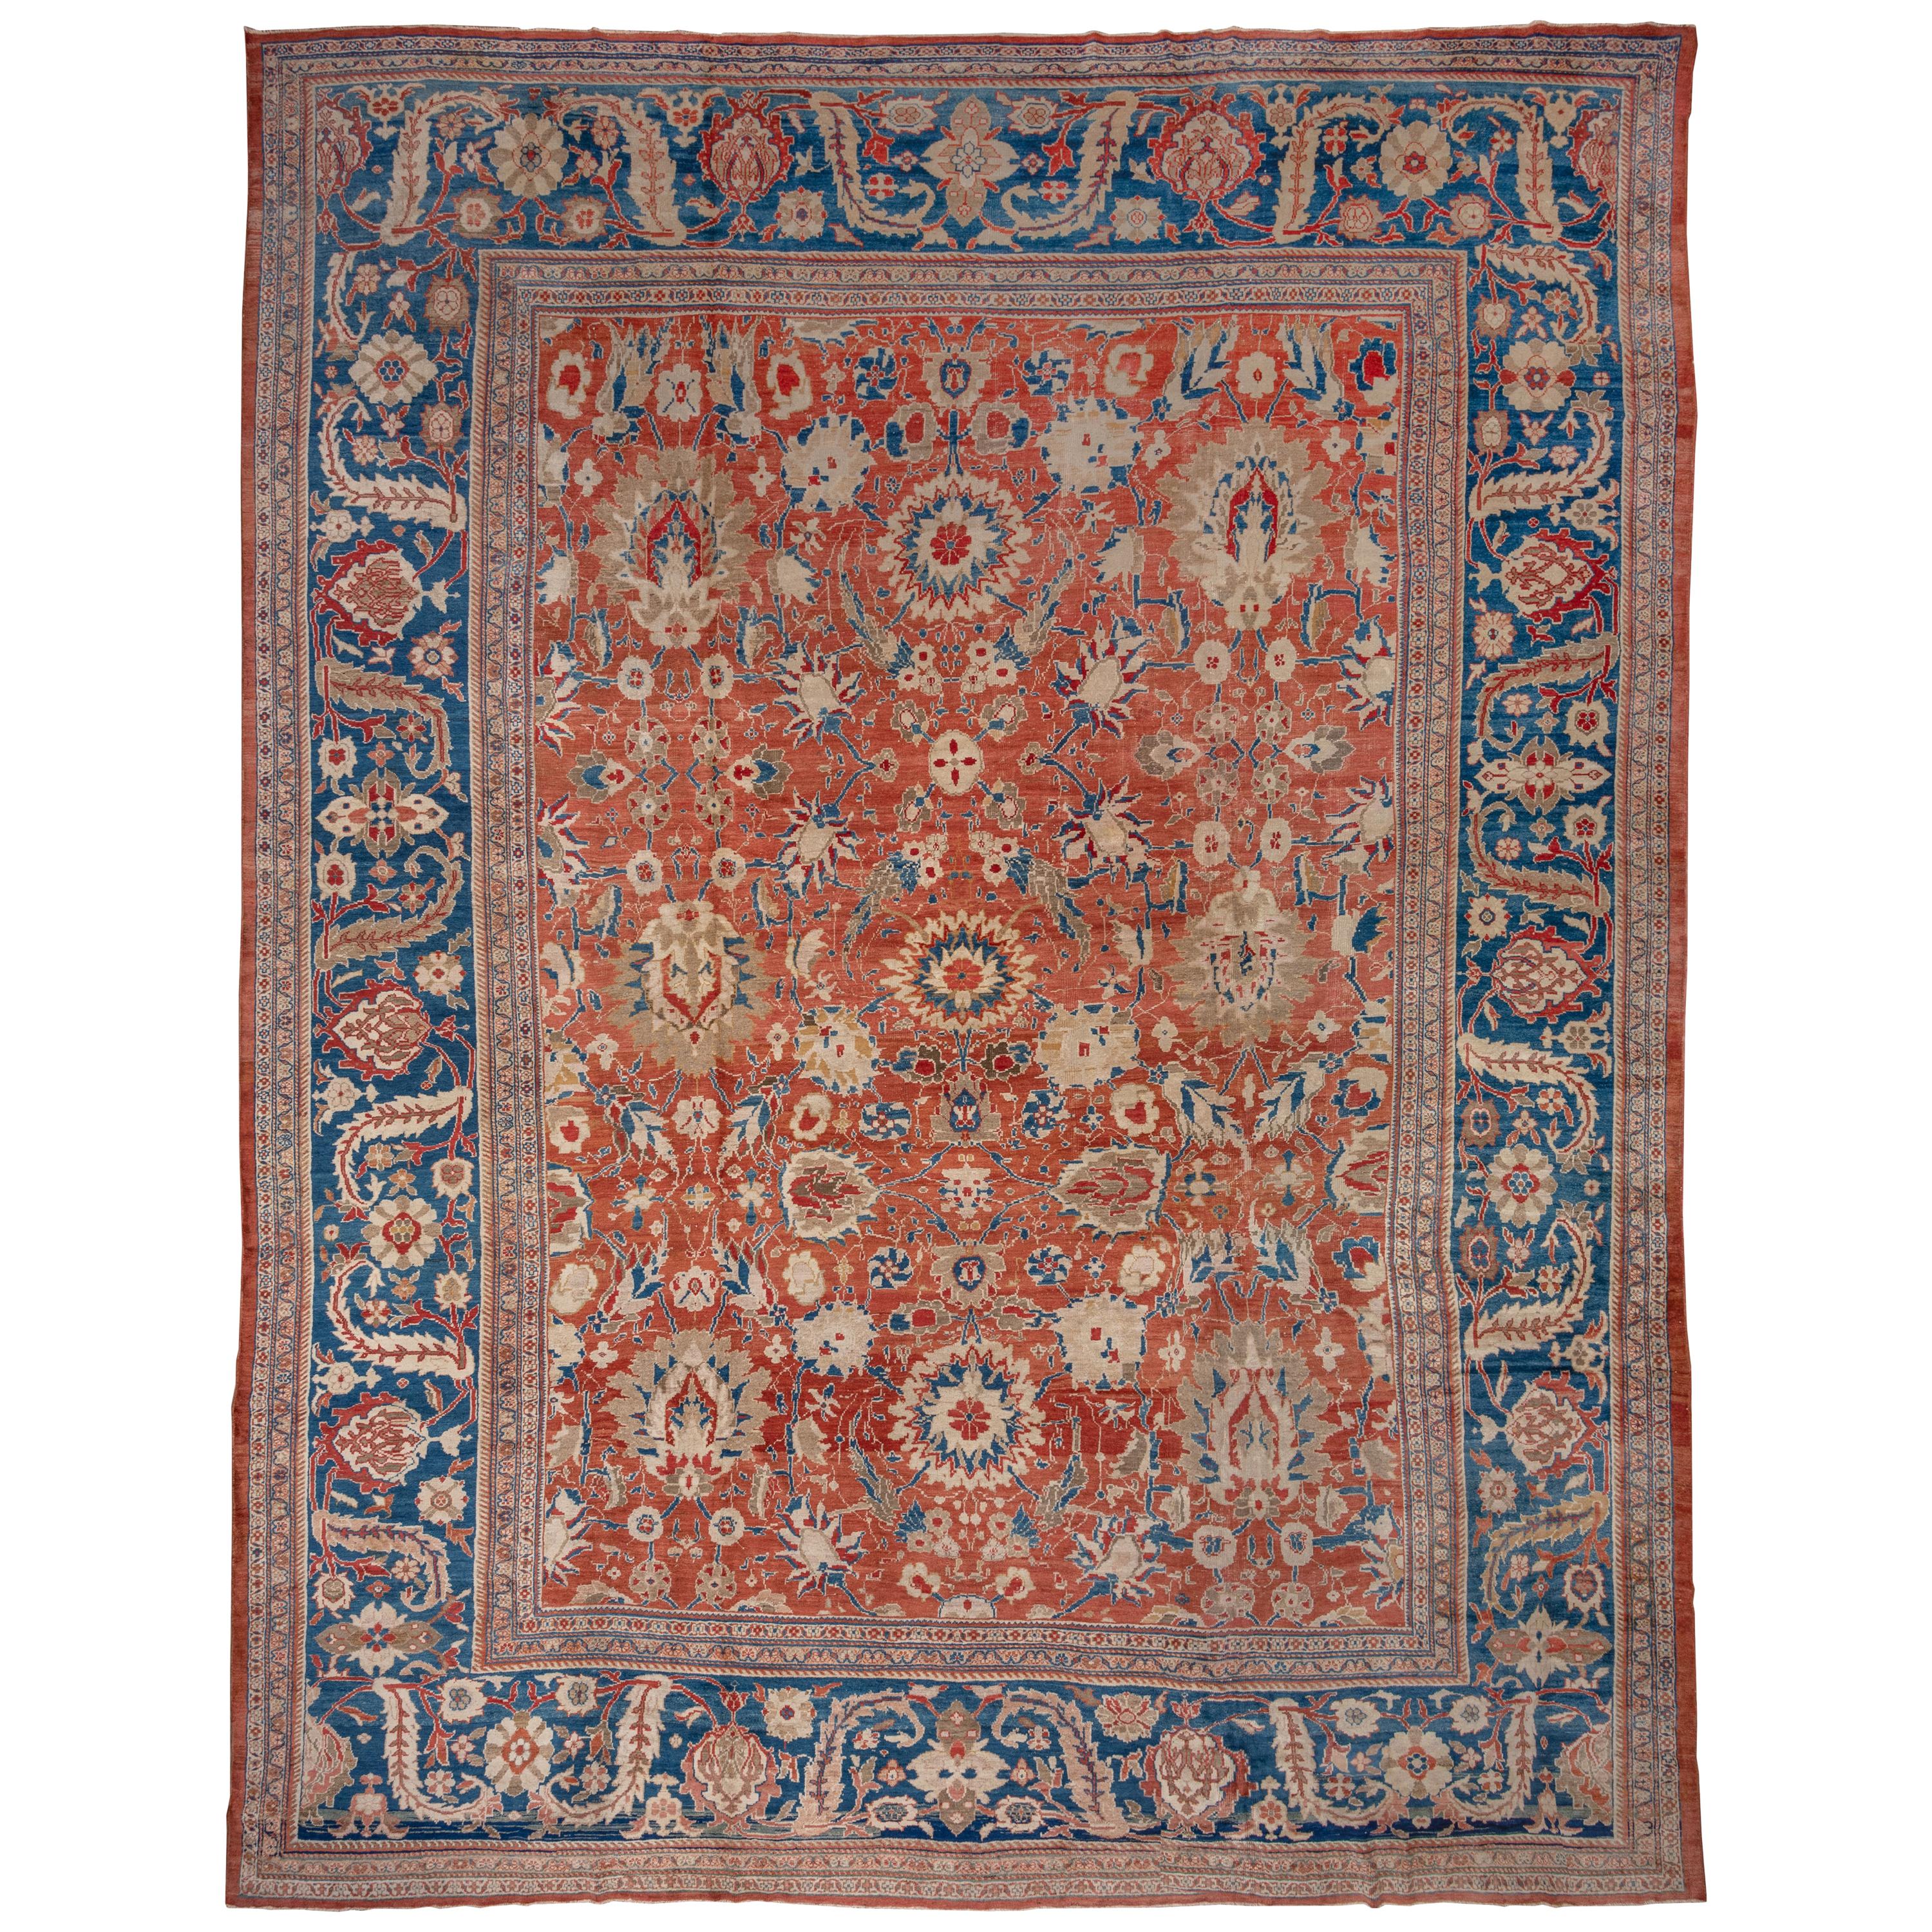 Magnificent Antique Persian Sultanabad Carpet, Bright Orange & Red Allover Field